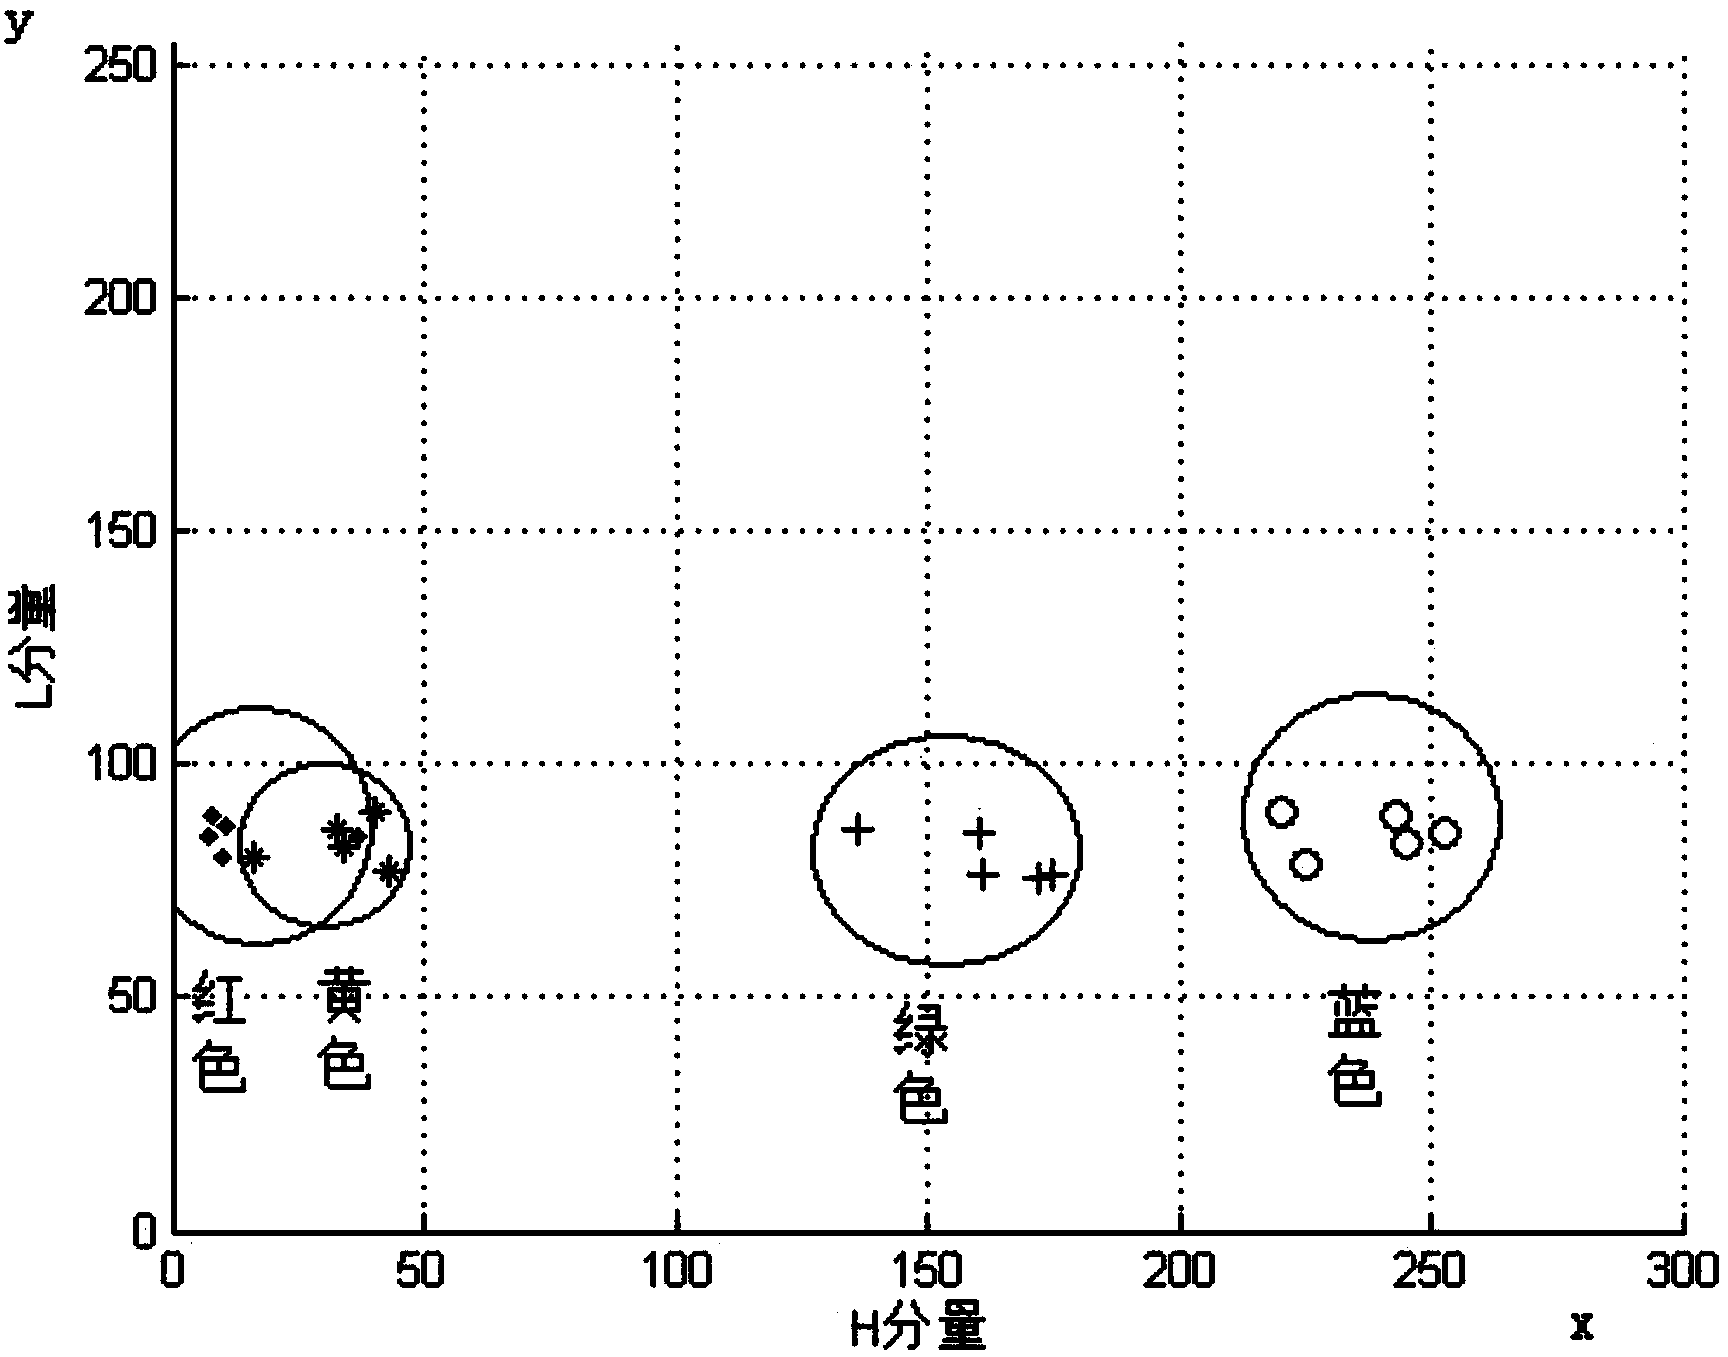 Automobile meter indicator lamp color detecting method based on dynamic clustering method